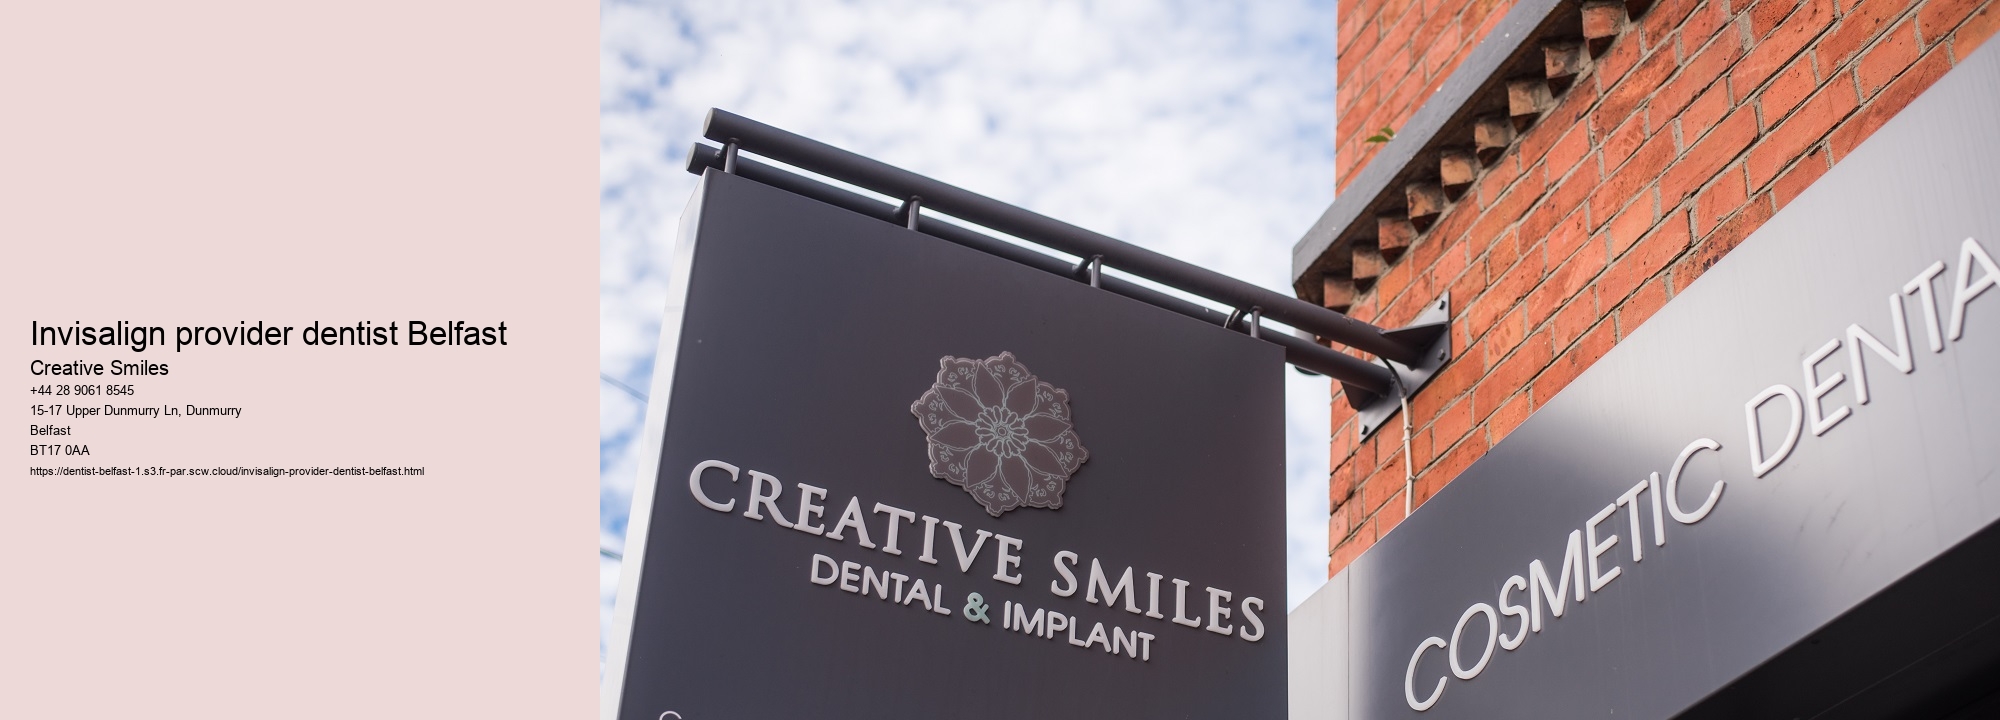 Invisalign provider dentist Belfast